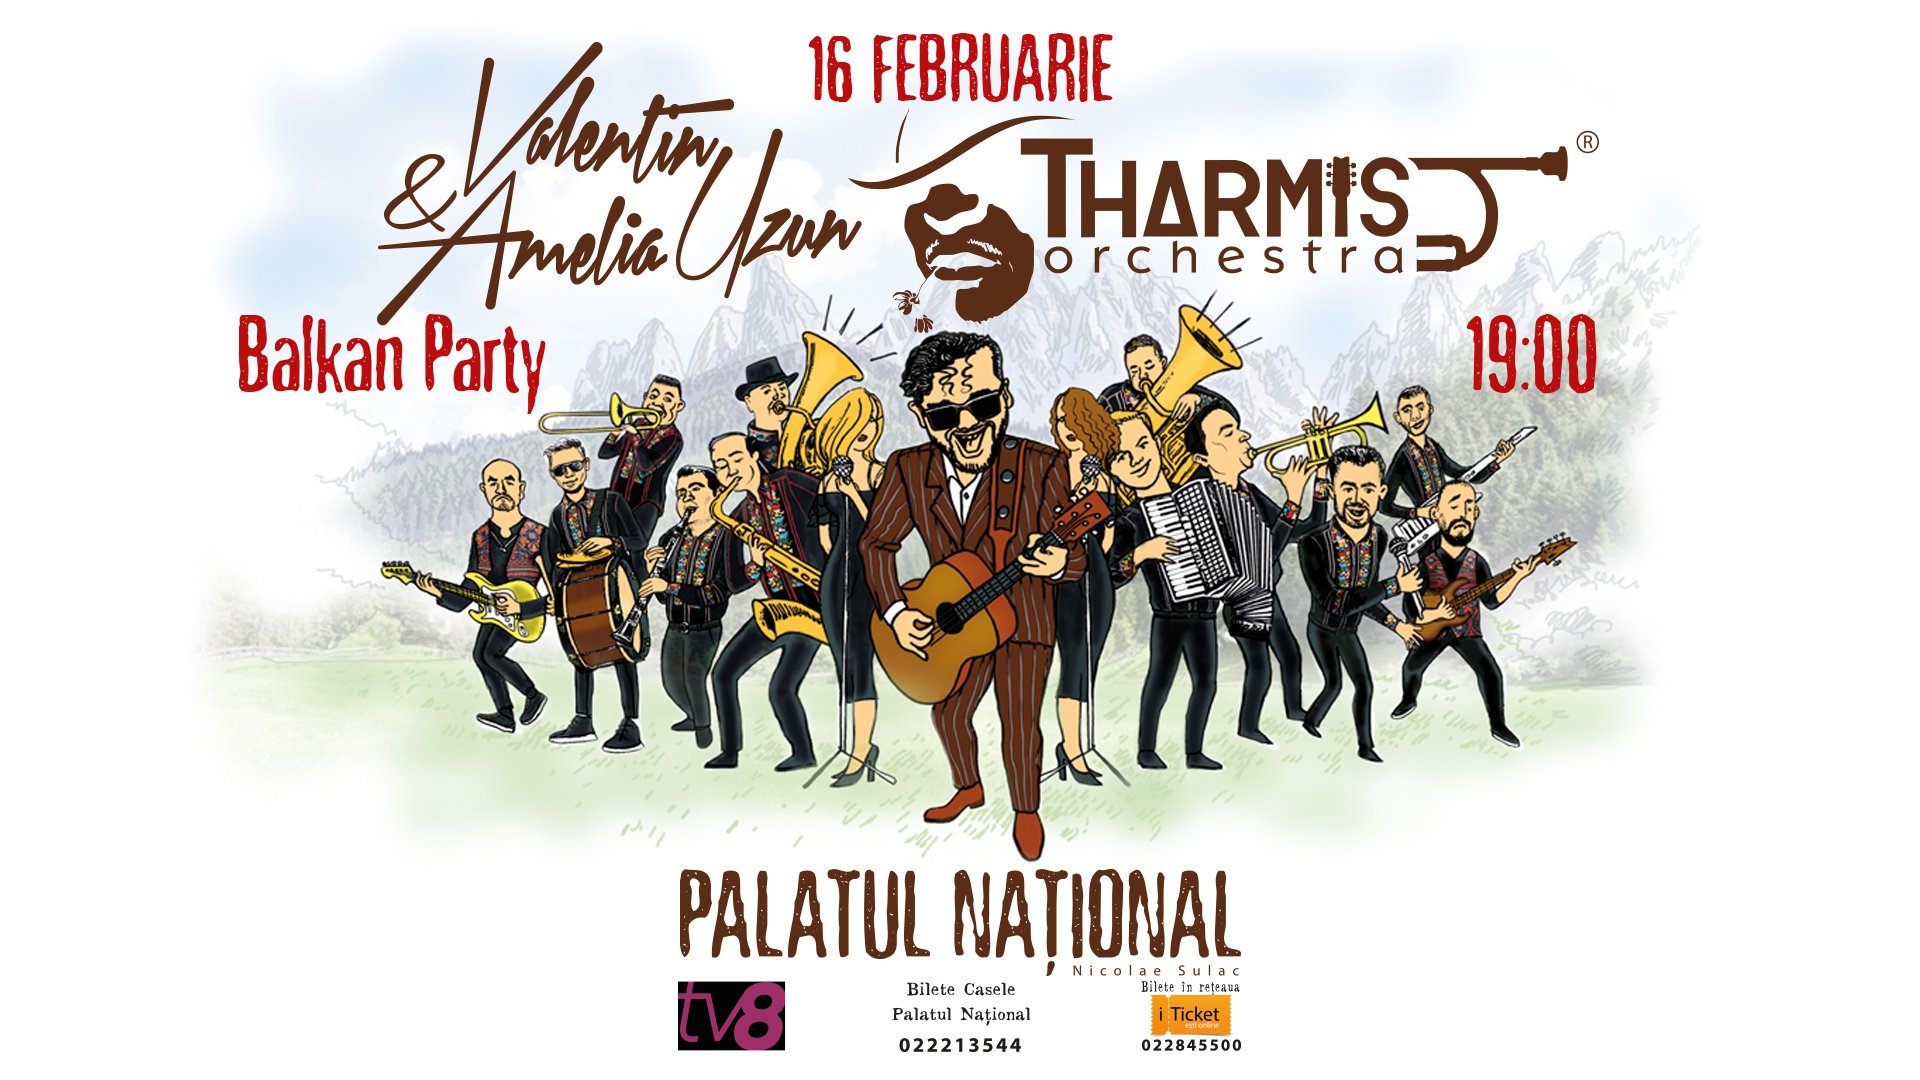 Valentin Uzun și Orchestra Tharmis - Balkan Party 